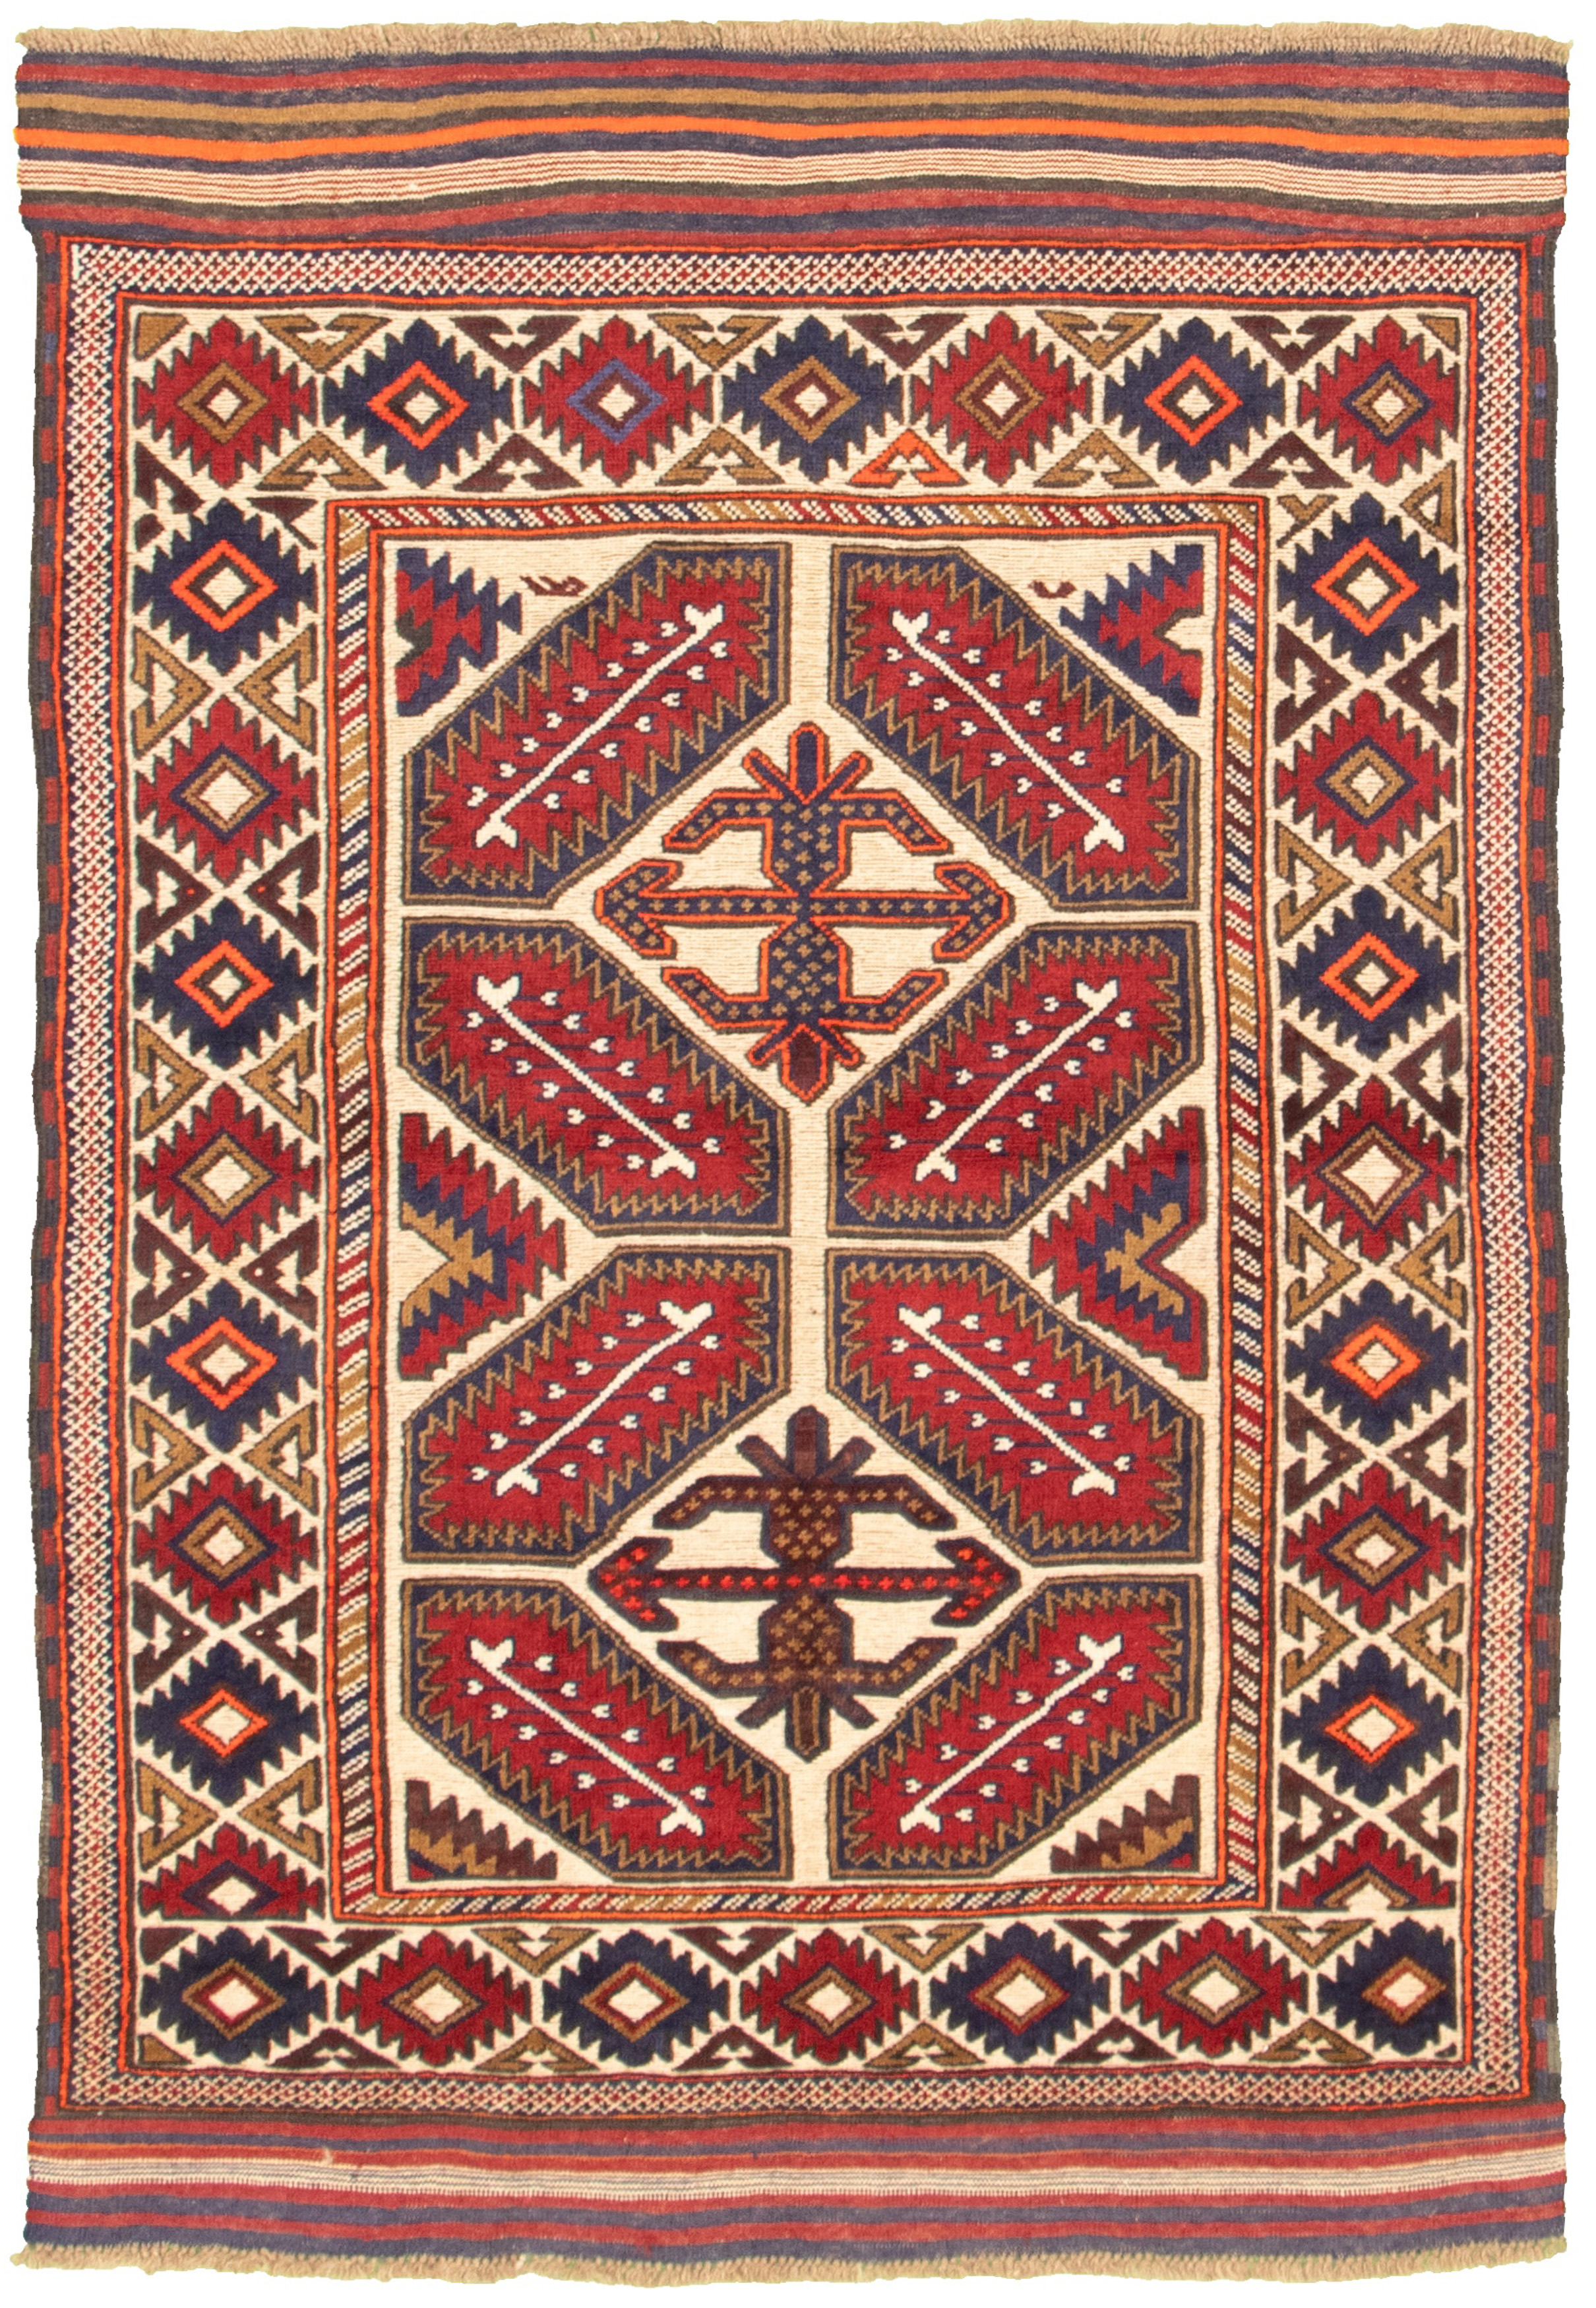 Hand-knotted Tajik Caucasian Cream, Red Wool Rug 4'1" x 5'11"  Size: 4'1" x 5'11"  